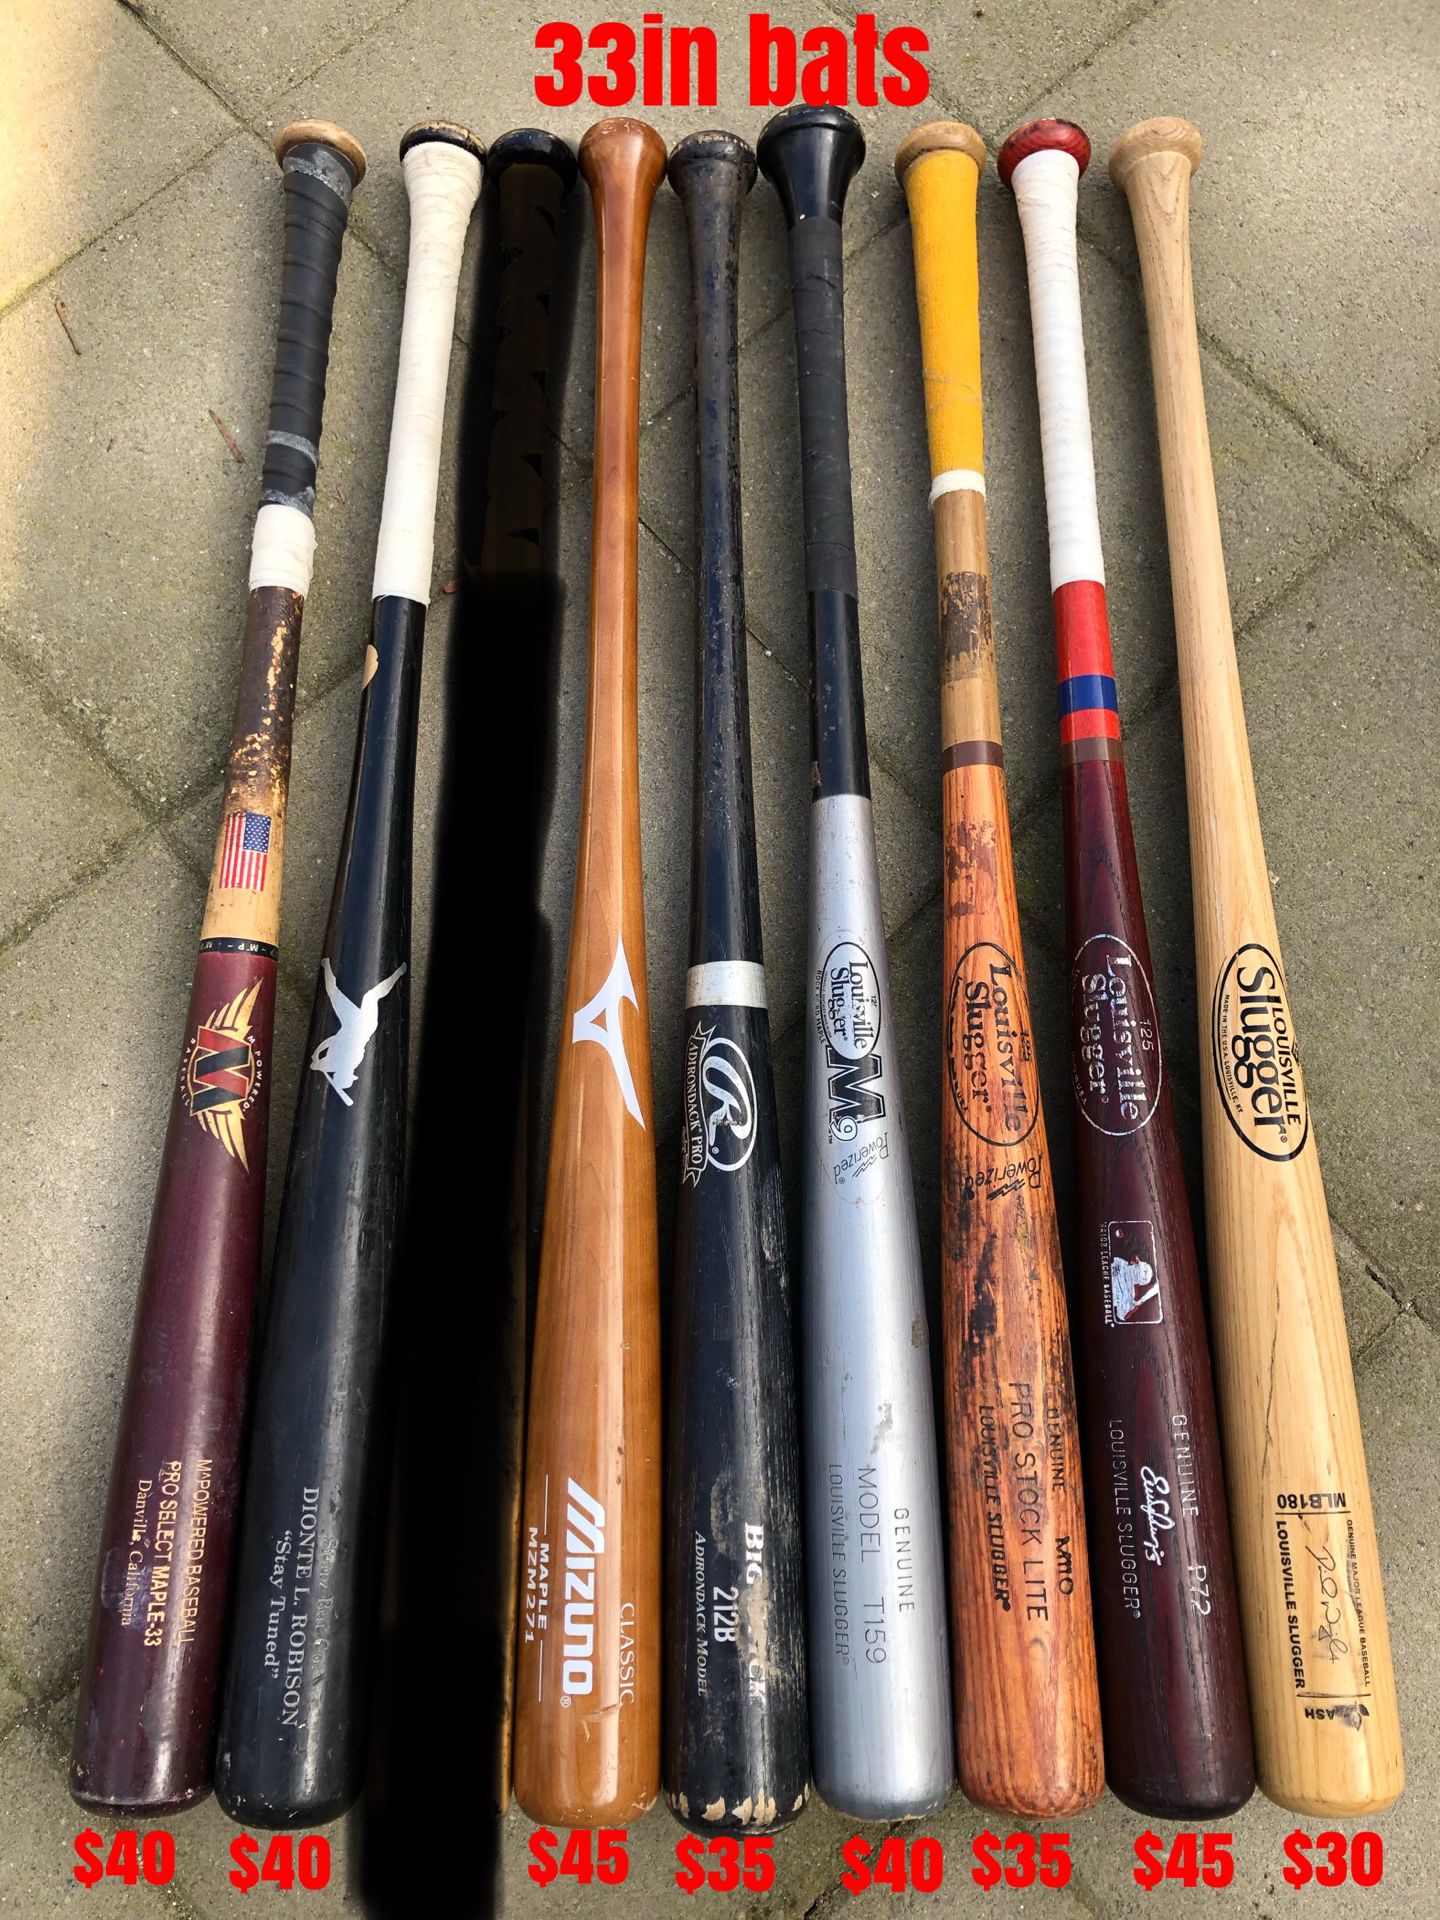 Baseball wood bats Louisville slugger marucci Rawlings easton equipment gloves bat